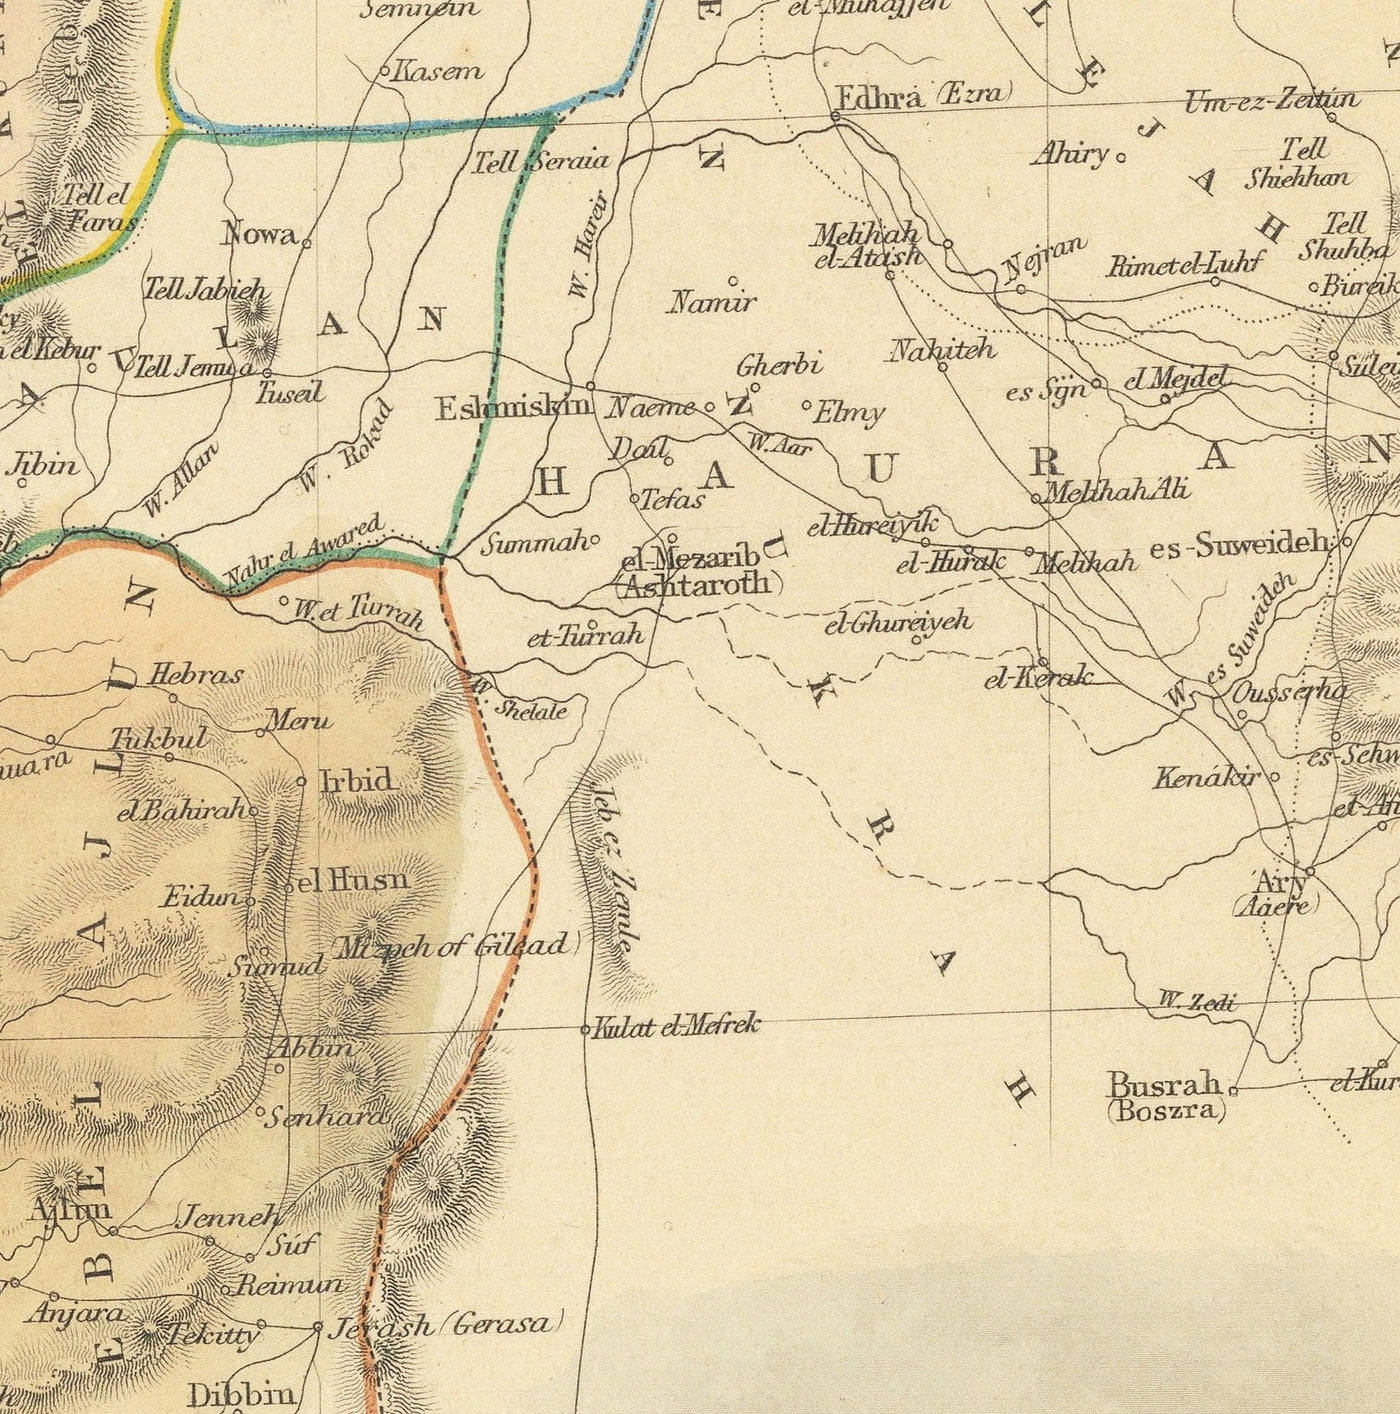 Old Map of Palestine in 1851 - Israel, West Bank, Gaza, Nazareth, Nablus, Haifa, Jerusalem